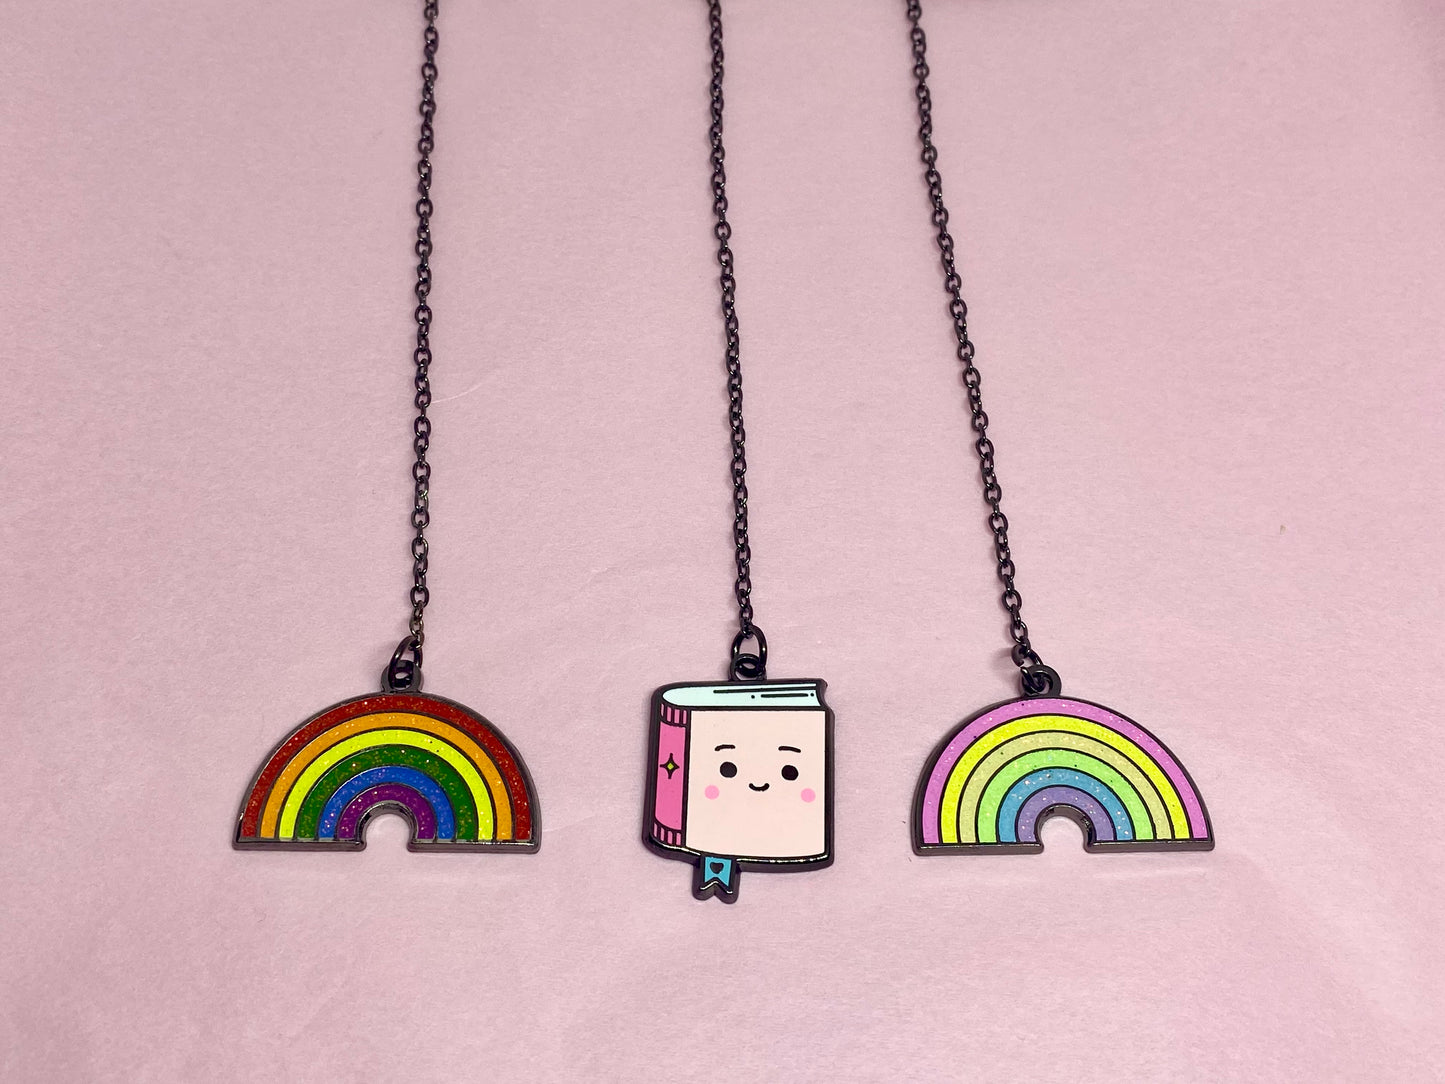 Rainbow brights enamel bookmark with chain